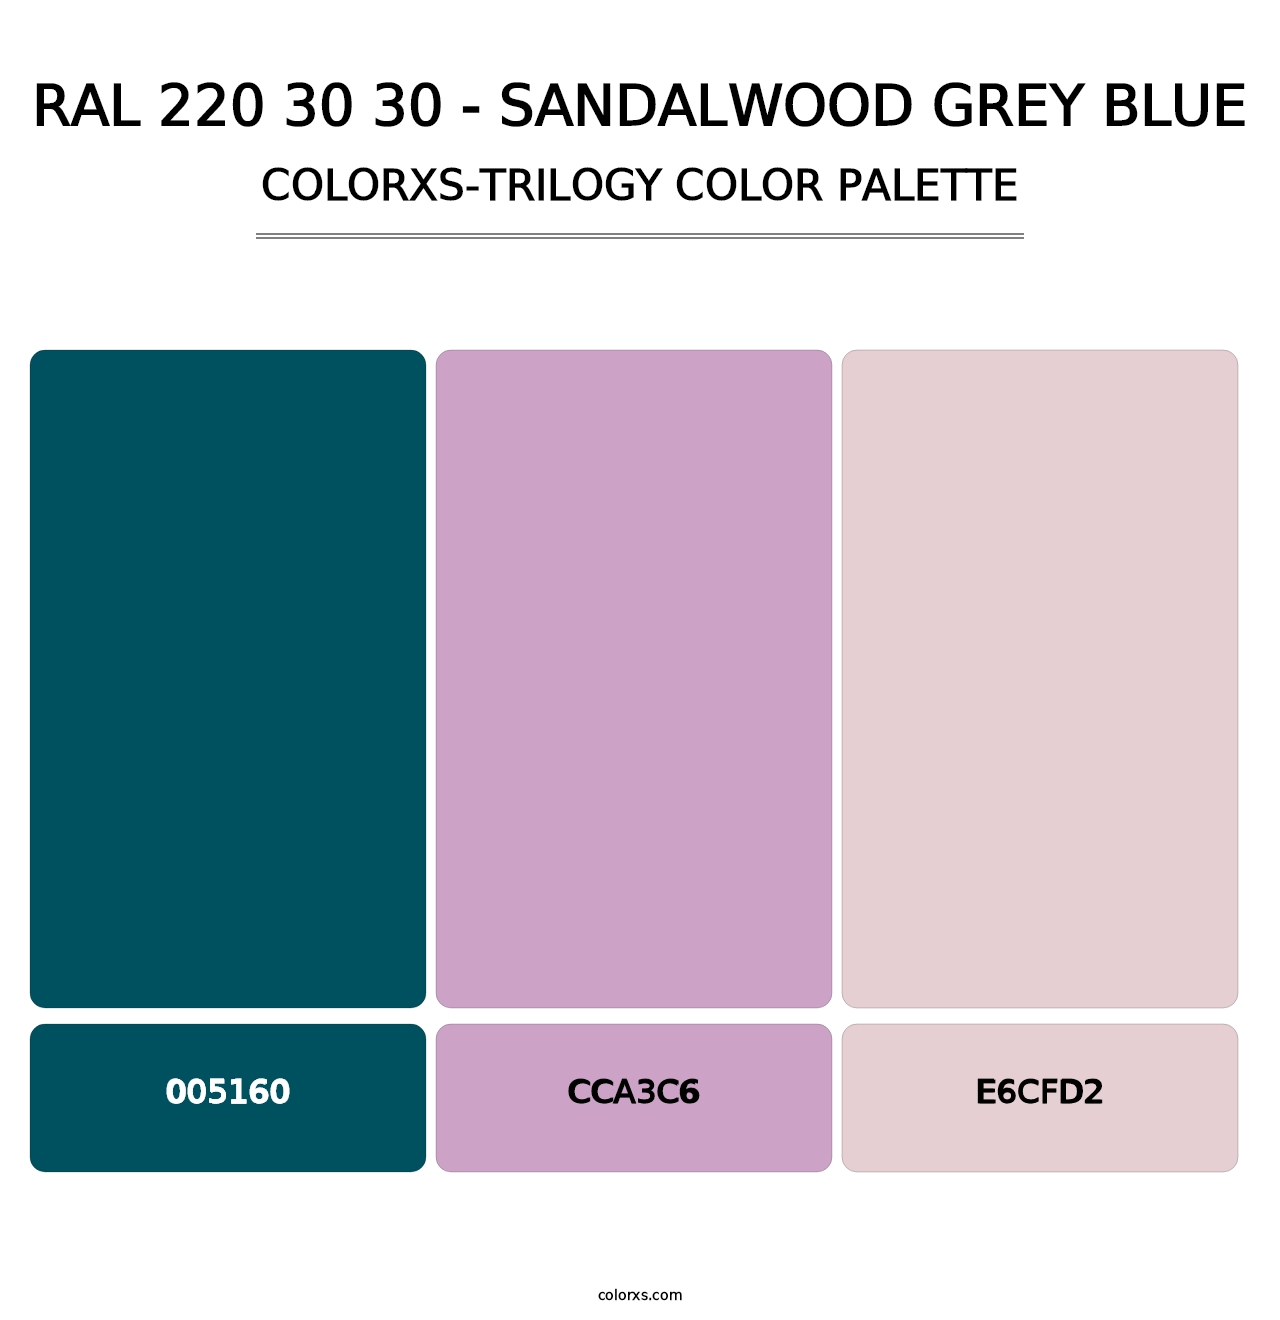 RAL 220 30 30 - Sandalwood Grey Blue - Colorxs Trilogy Palette